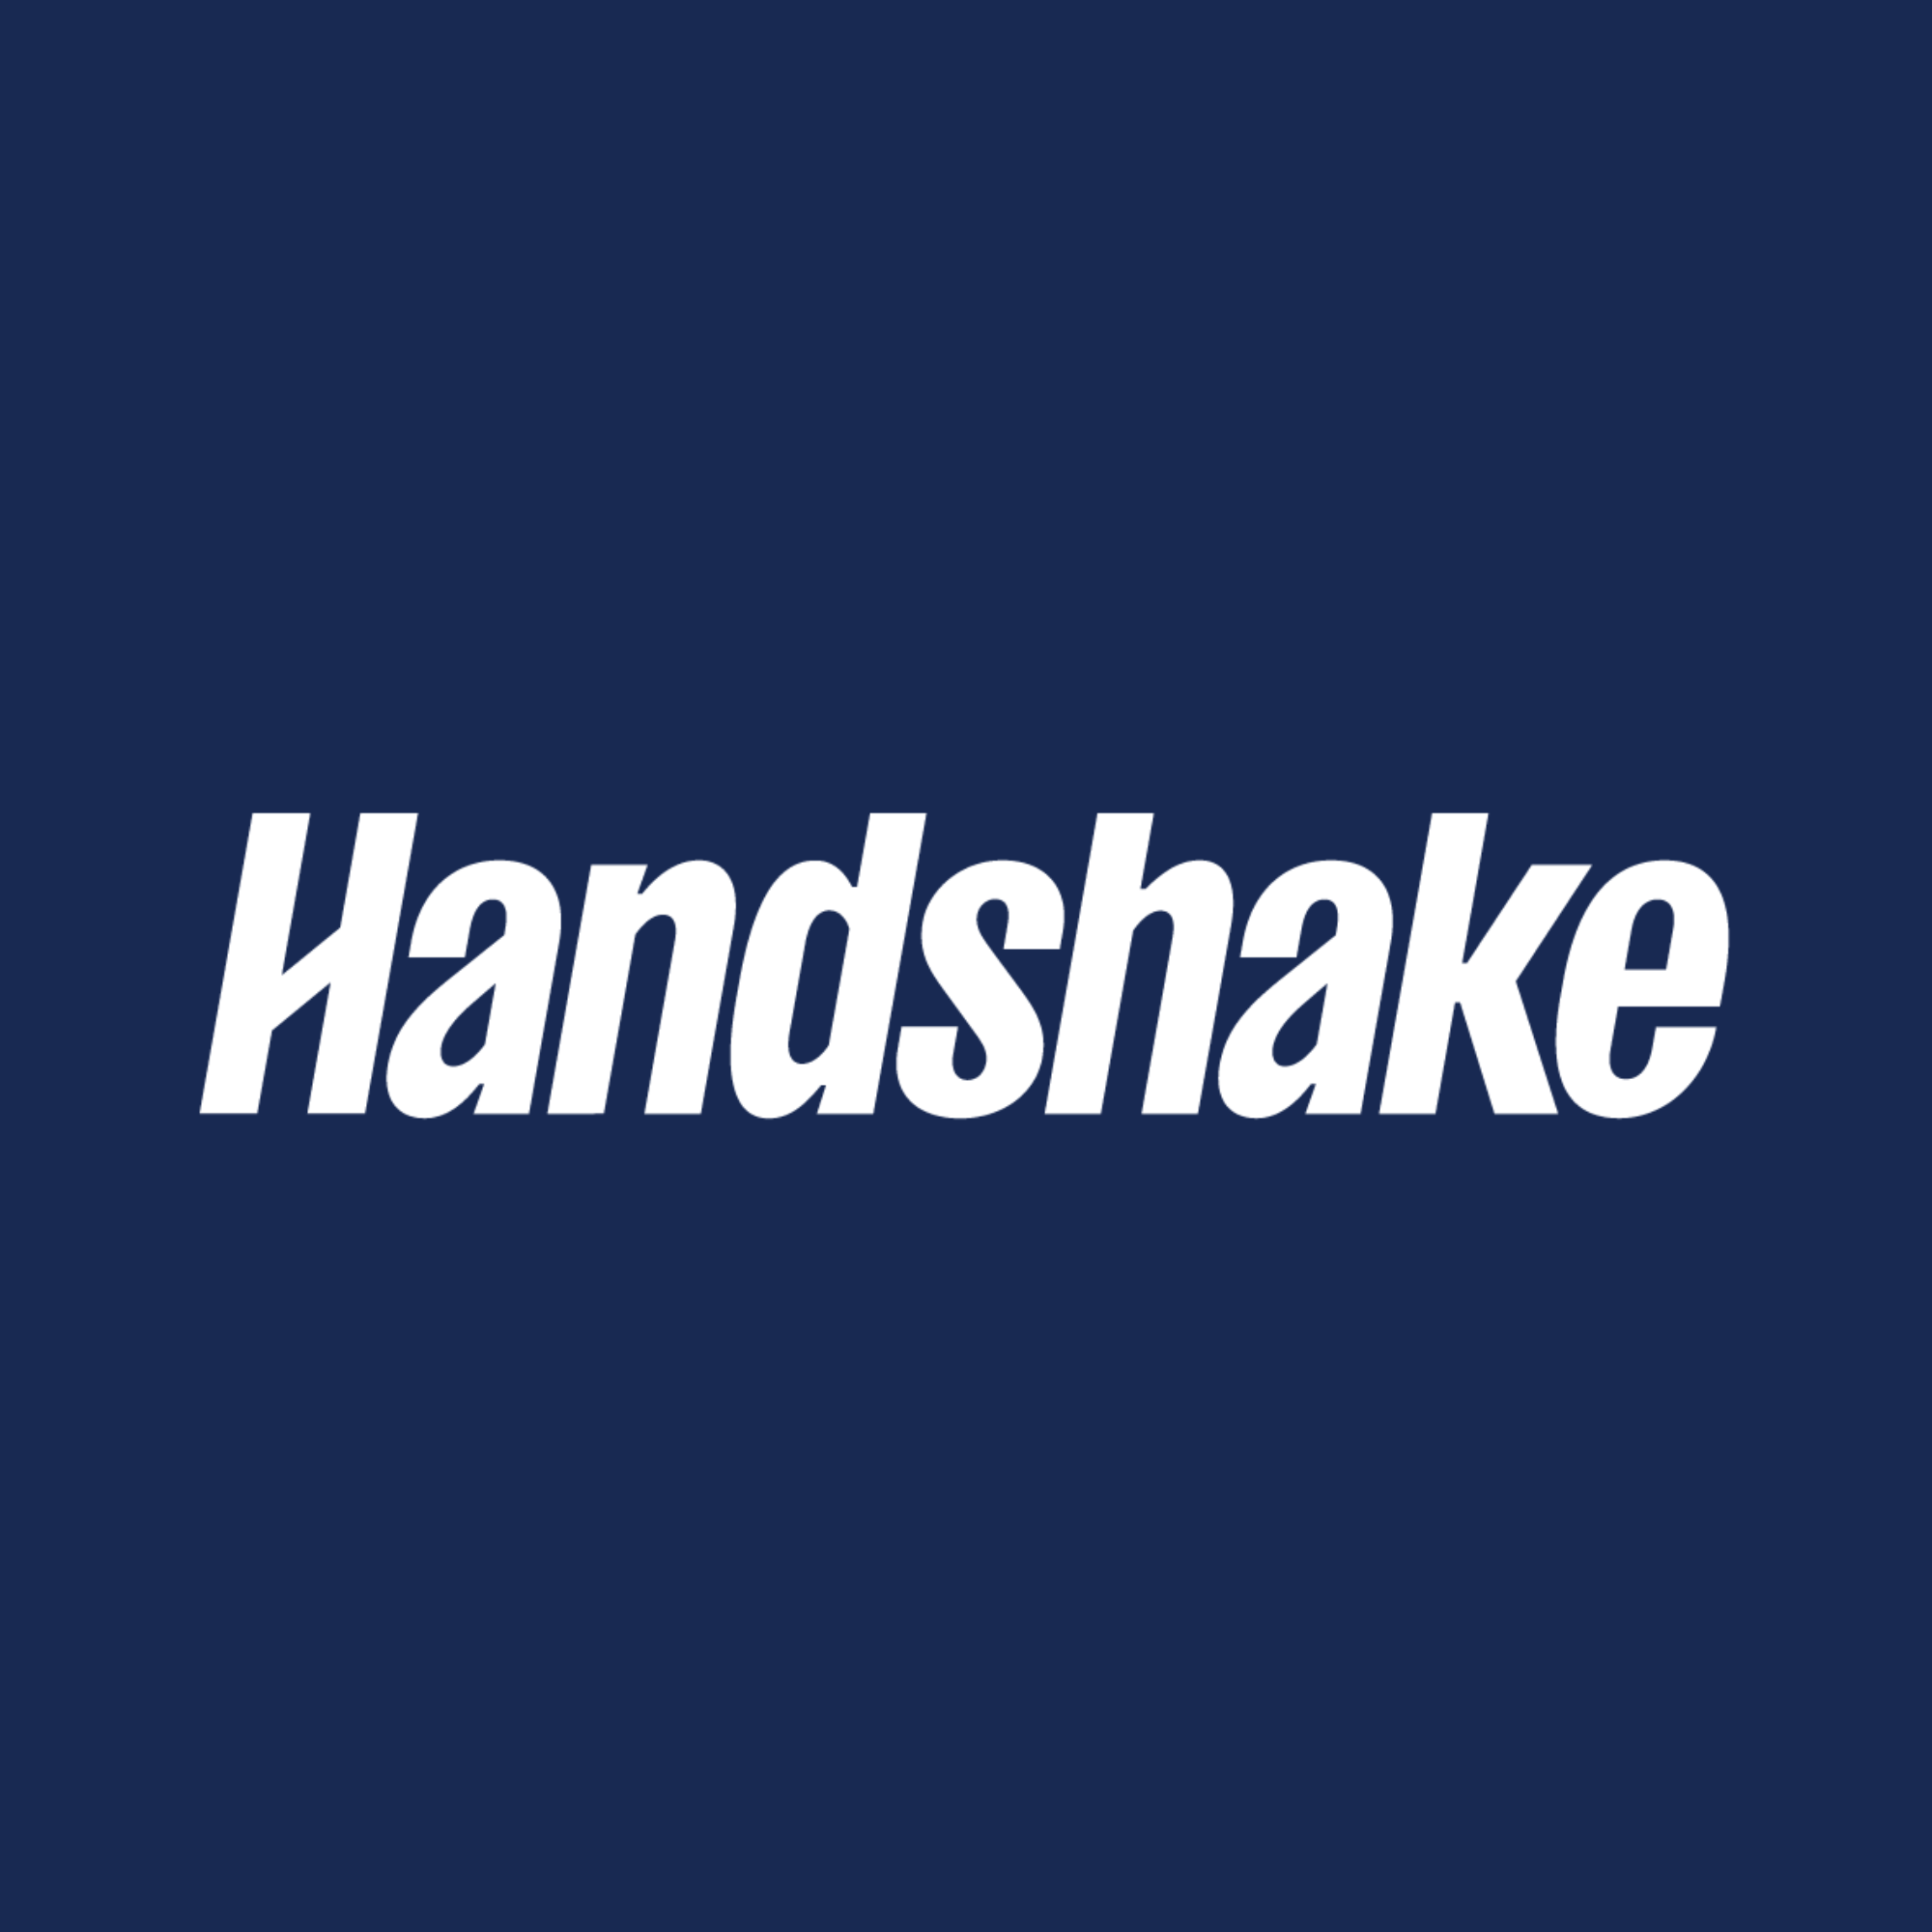 Handshake job board logo